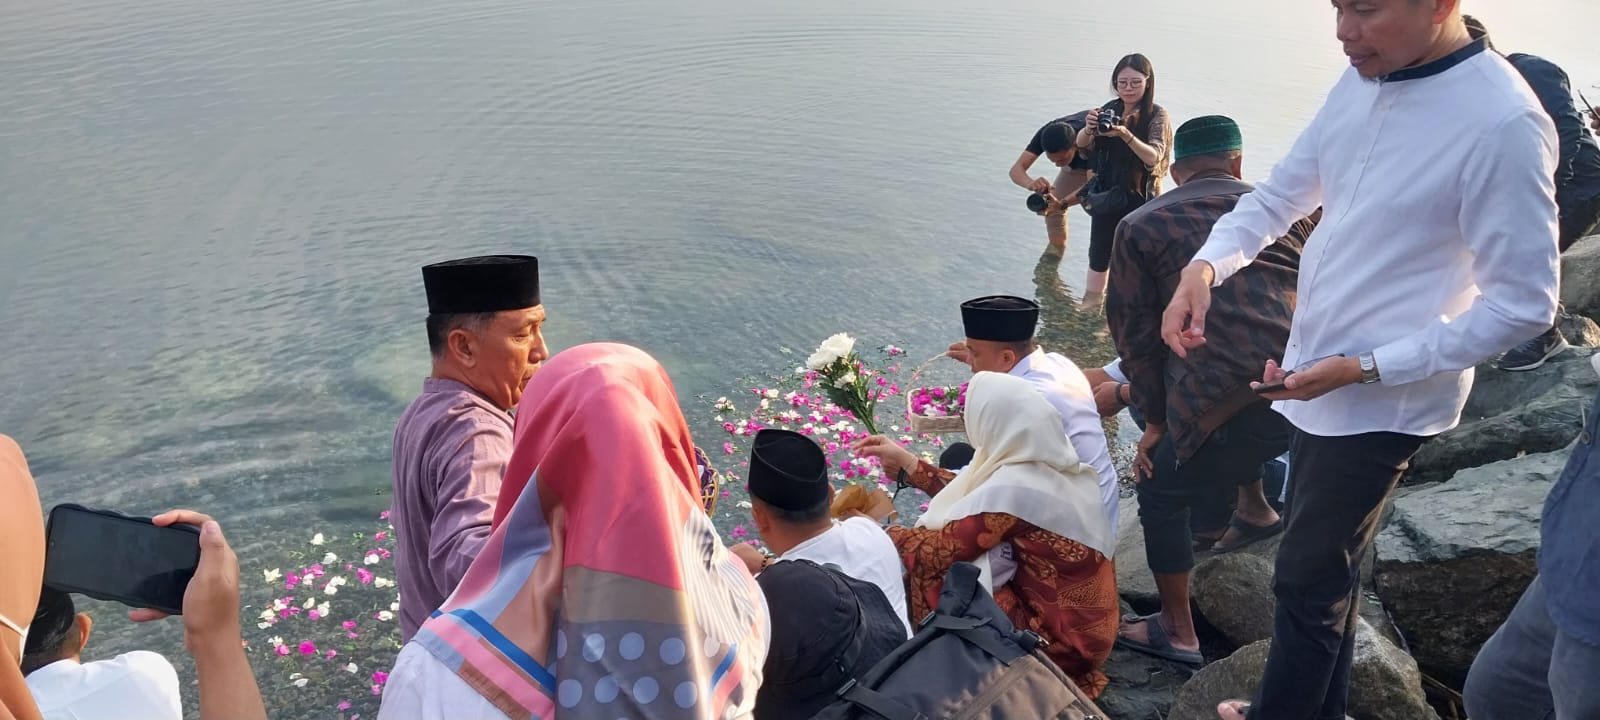 WALI KOTA Palu, Hadianto Rasyid bersama rombongan menabur bunga di Pantai Talise sebagai salah satu lokasi jatuhnya banyak korban gempa dan tsunami 28 September 2018 lalu. FOTO: HERNI/SULTENGTERKINI.ID